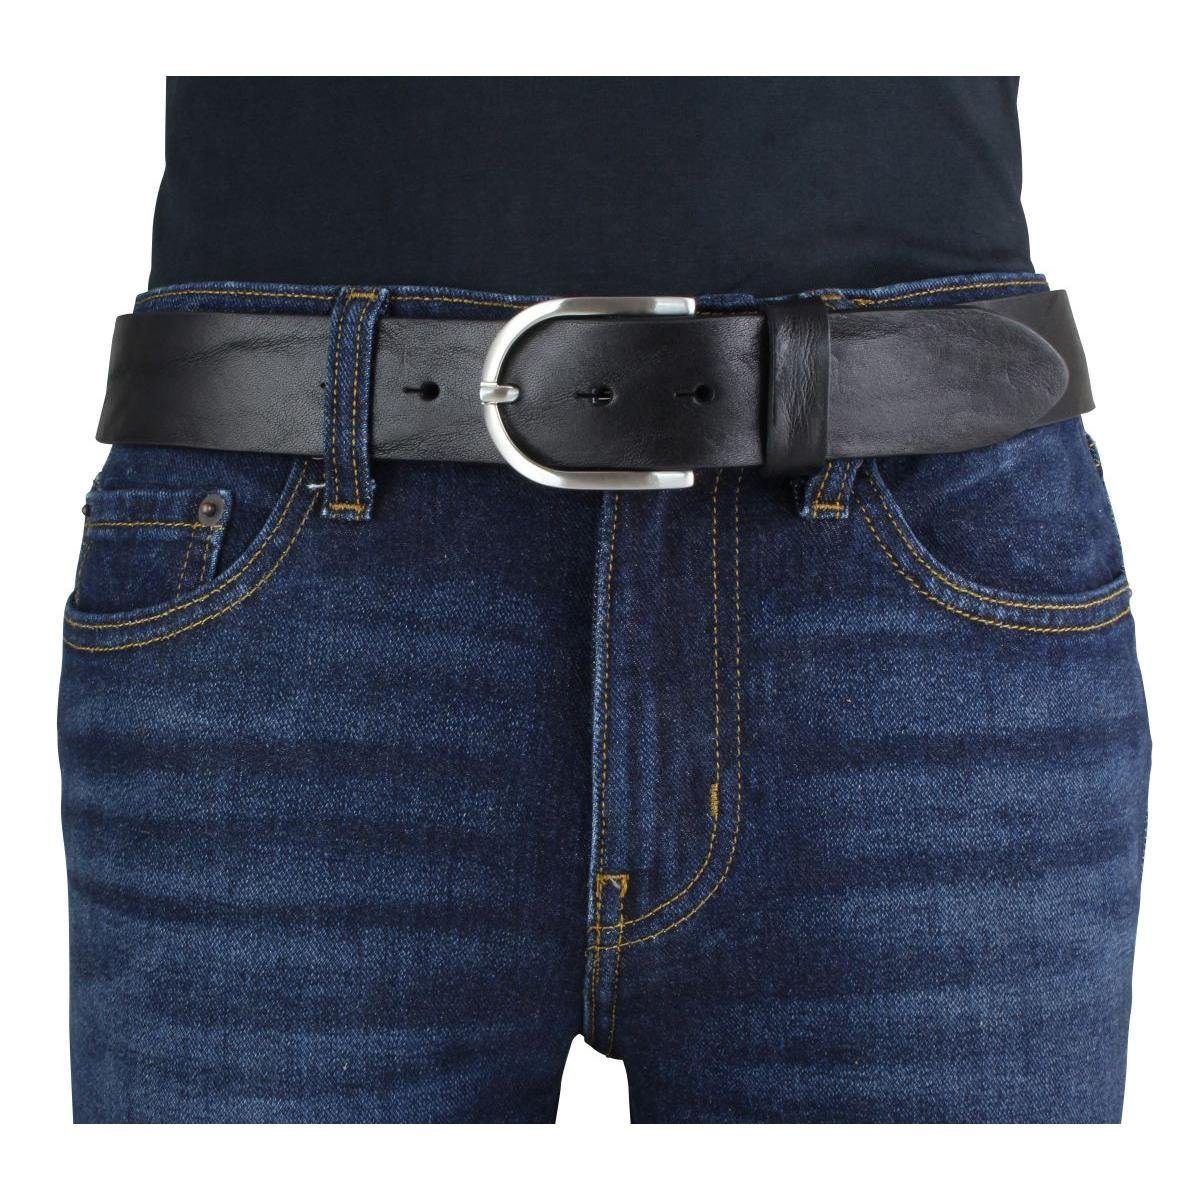 Vollrindleder Silber Jeans-Gürtel - Used-Look BELTINGER cm aus für Damen-Gürtel 4 Ledergürtel Damen Chocolate,